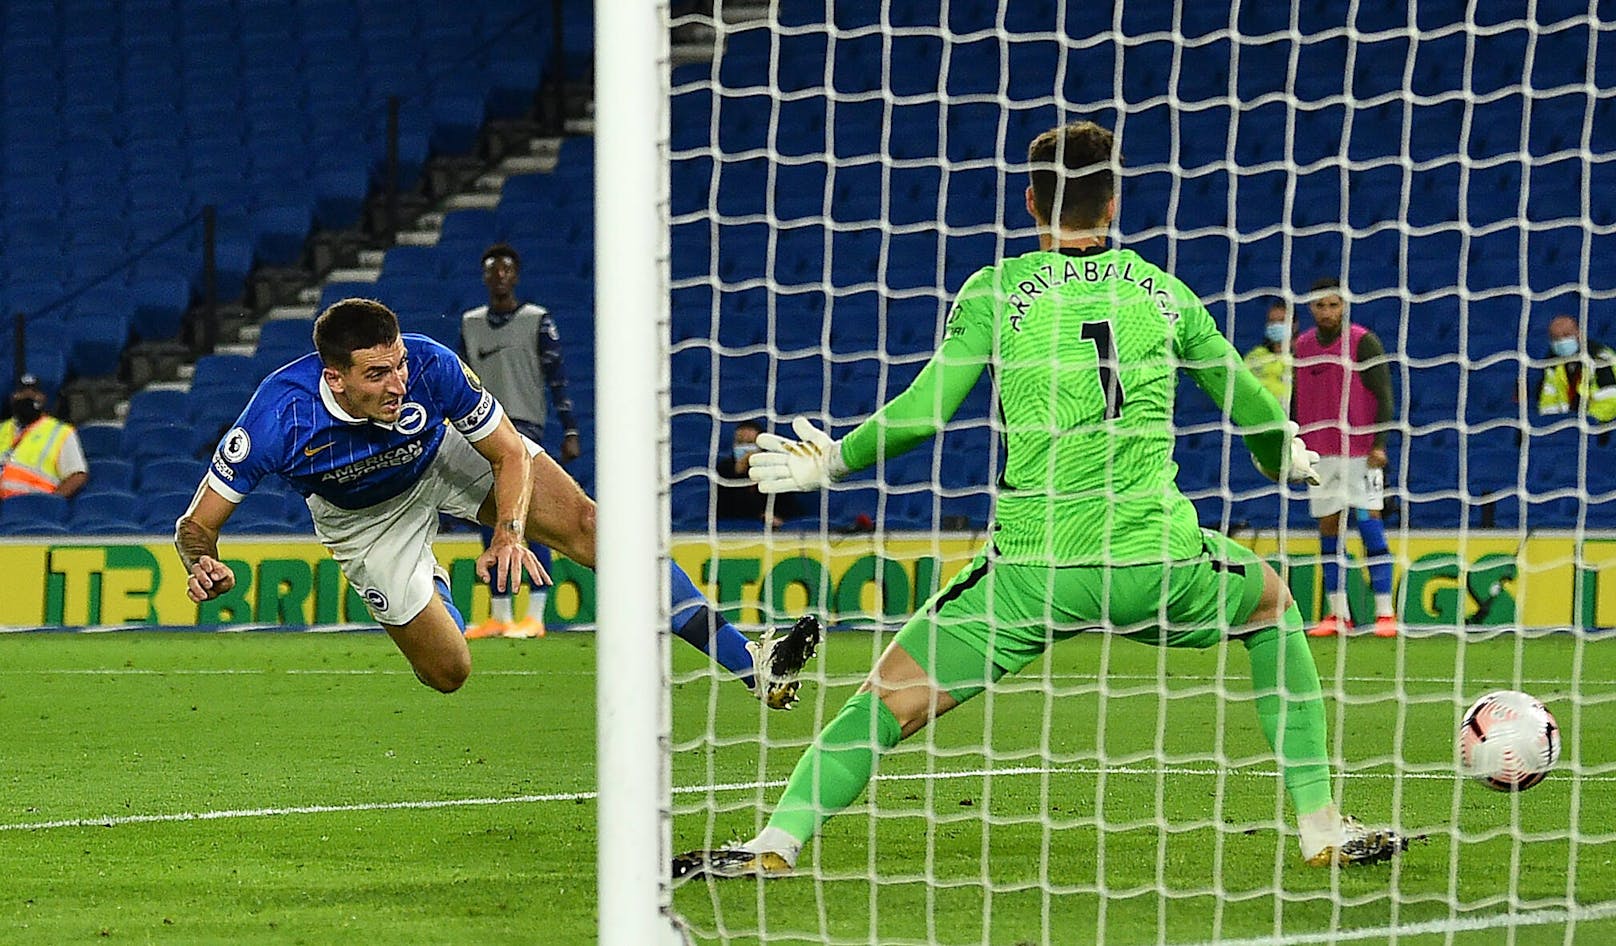 Chelsea feiert gegen Brighton einen klaren 3:1-Auftaktsieg